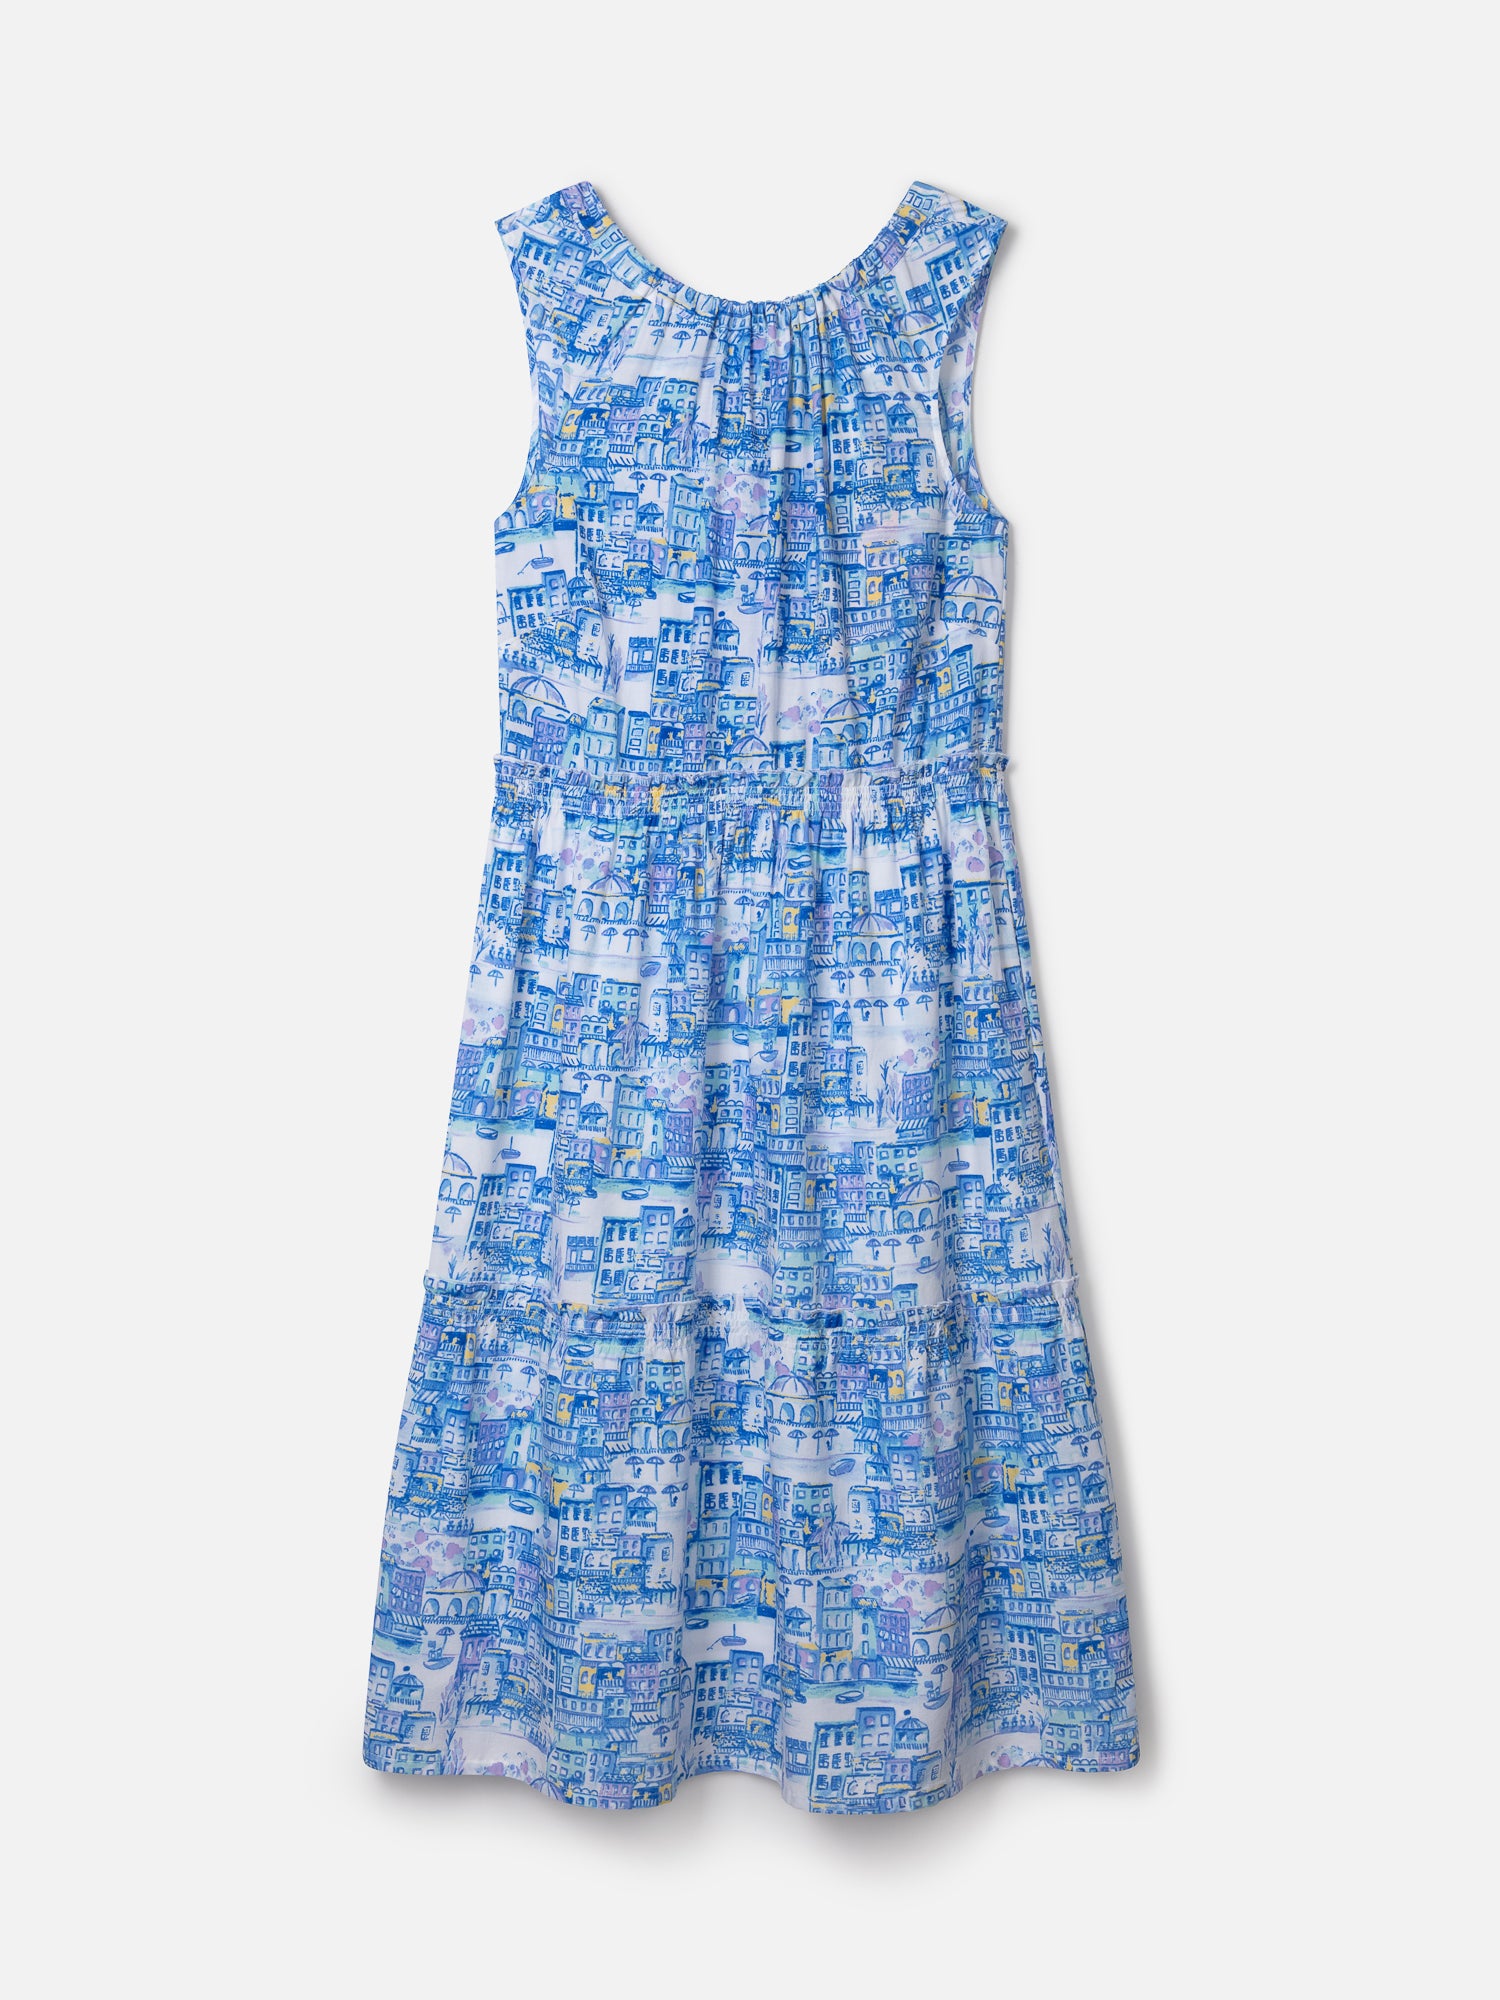 Imogen Organic Cotton Toile de Jouy Dress - Azure Blue